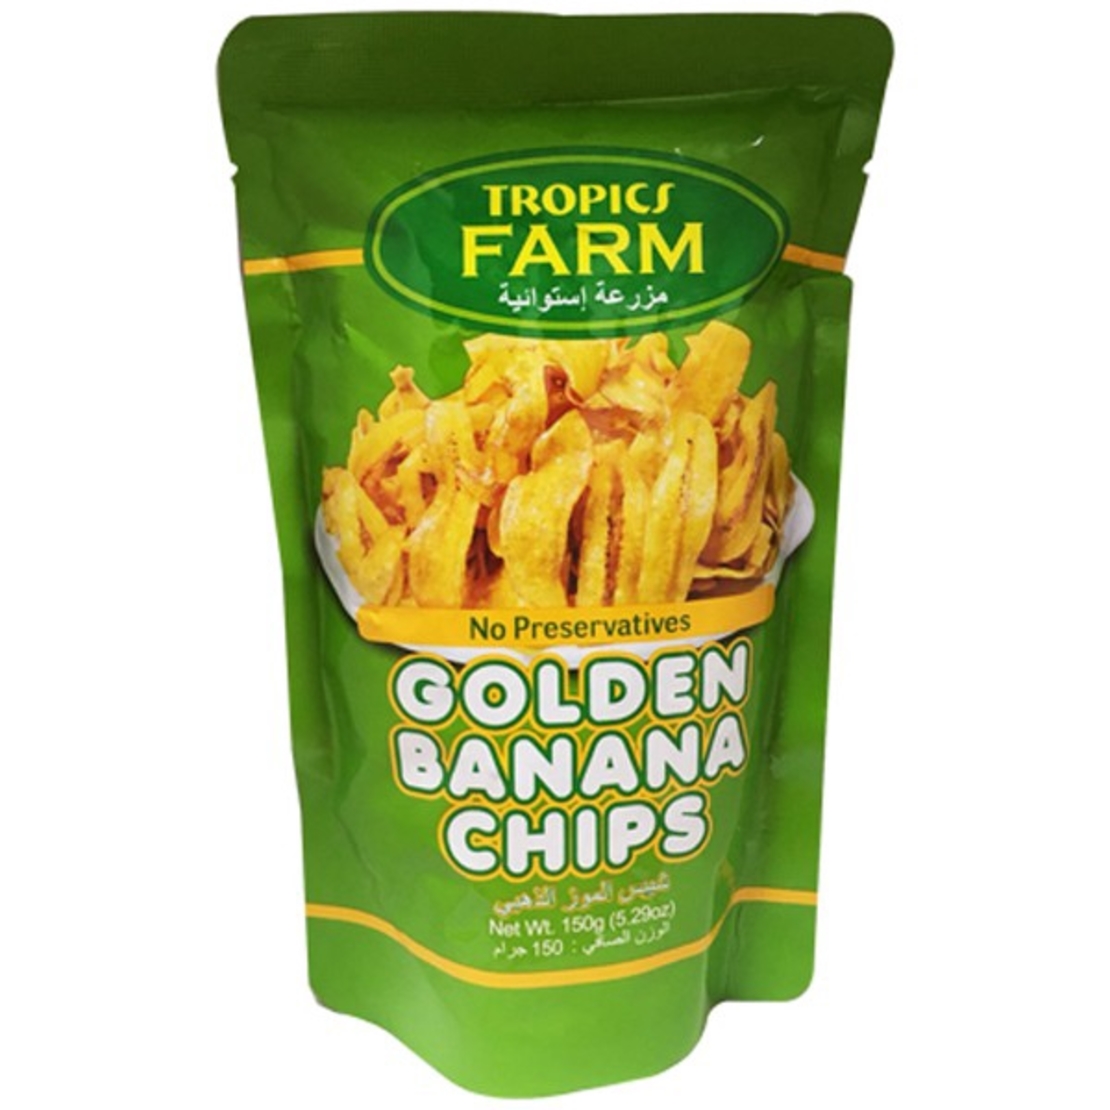 Tropics Farm - Golden Banana Chips 150g